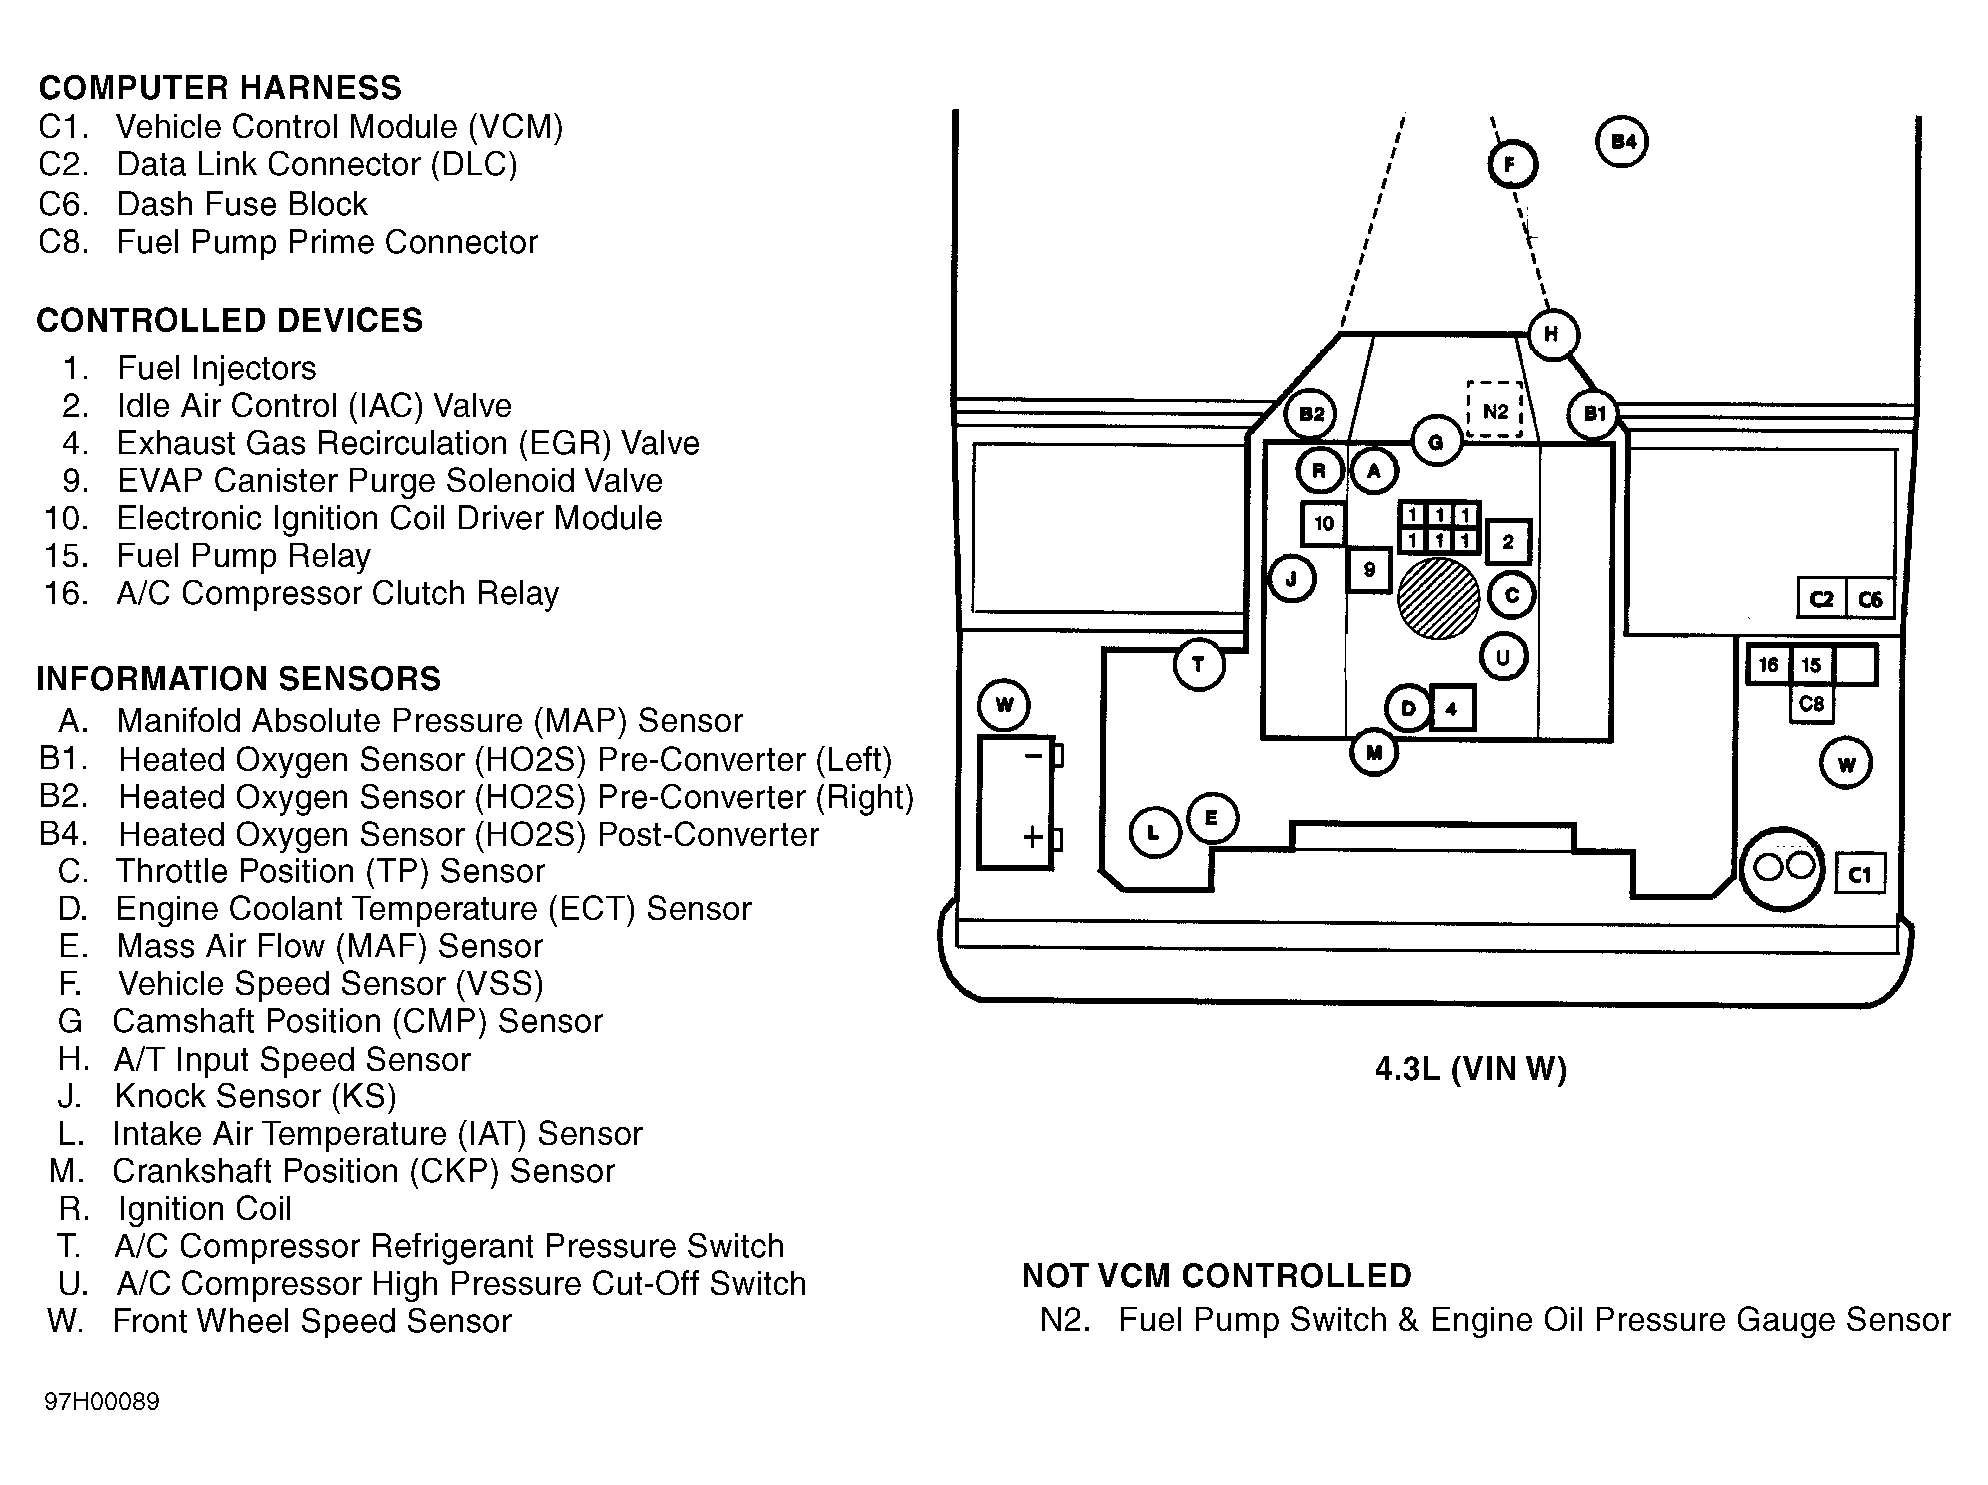 GMC Vandura P3500 1997 - Component Locations -  Engine Compartment (4.3L VIN W)